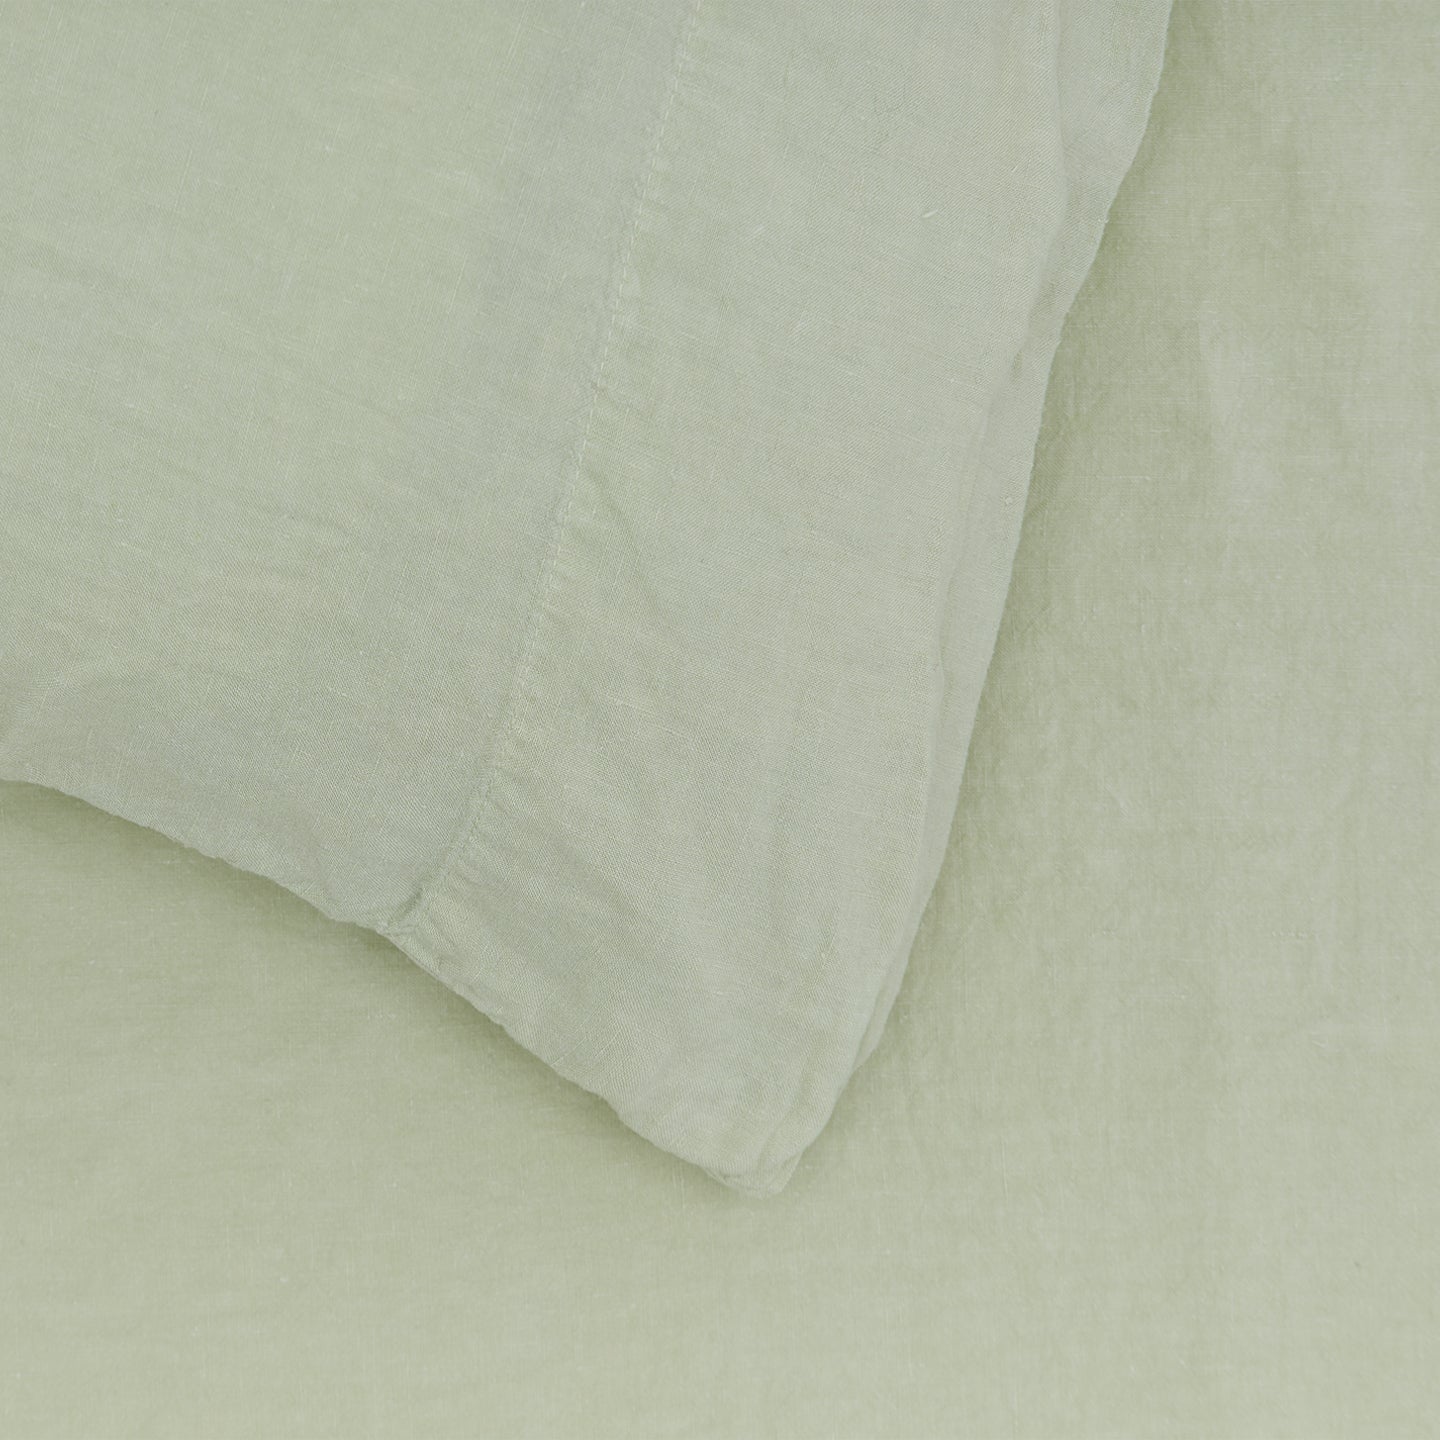 Simple Linen Pillowcases, Set of 2 - Sage